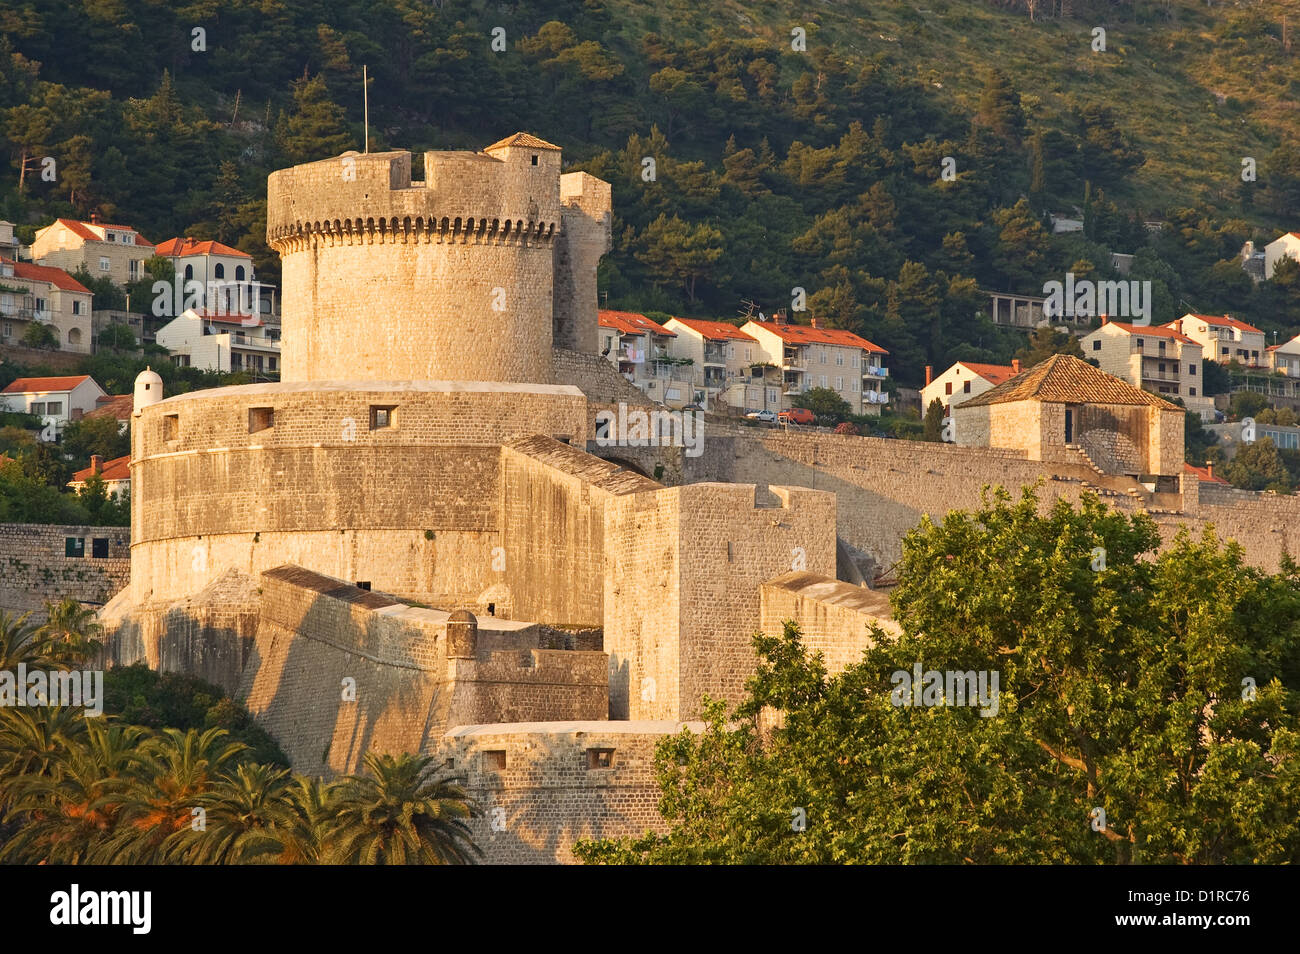 Elk192-3260 Croatia, Dalmatian Coast, Dubrovnik, city defensive walls and towers Stock Photo